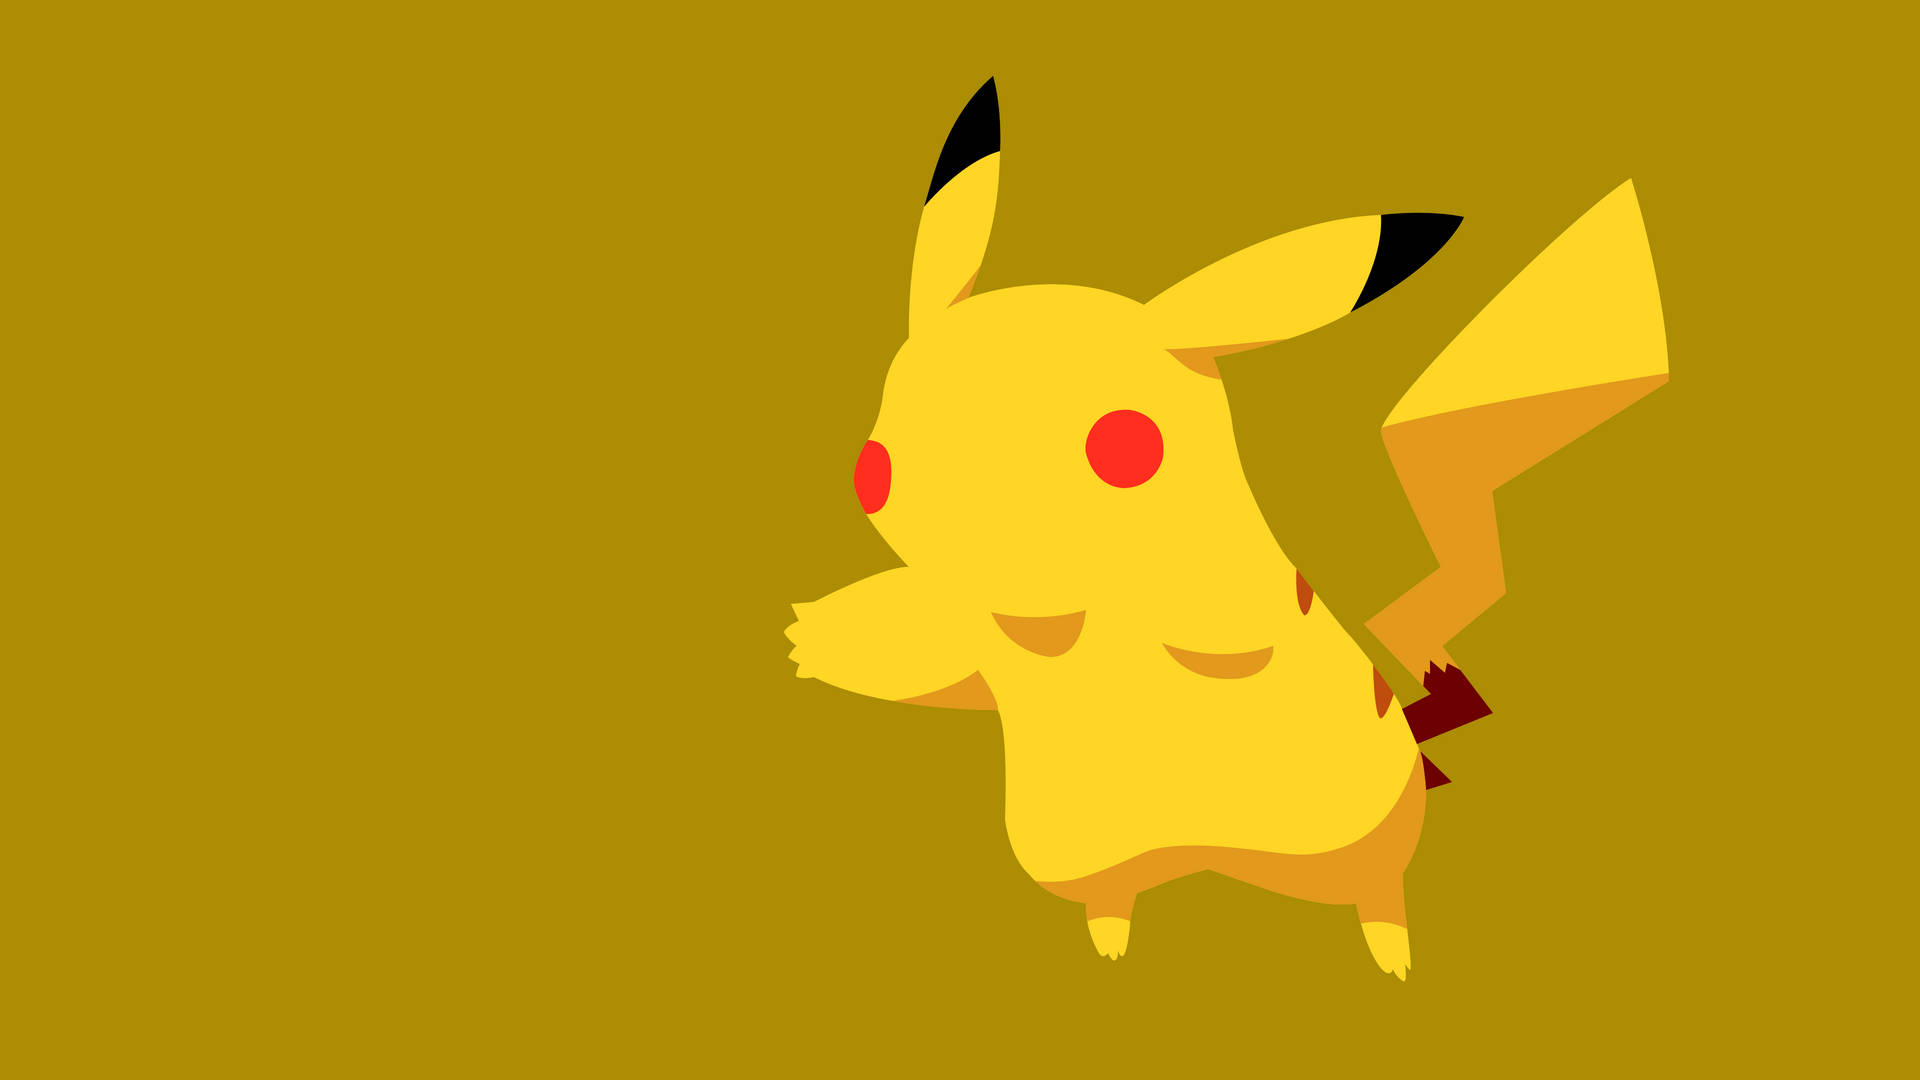 Pikachu 4k Leaping Vector Art Wallpaper